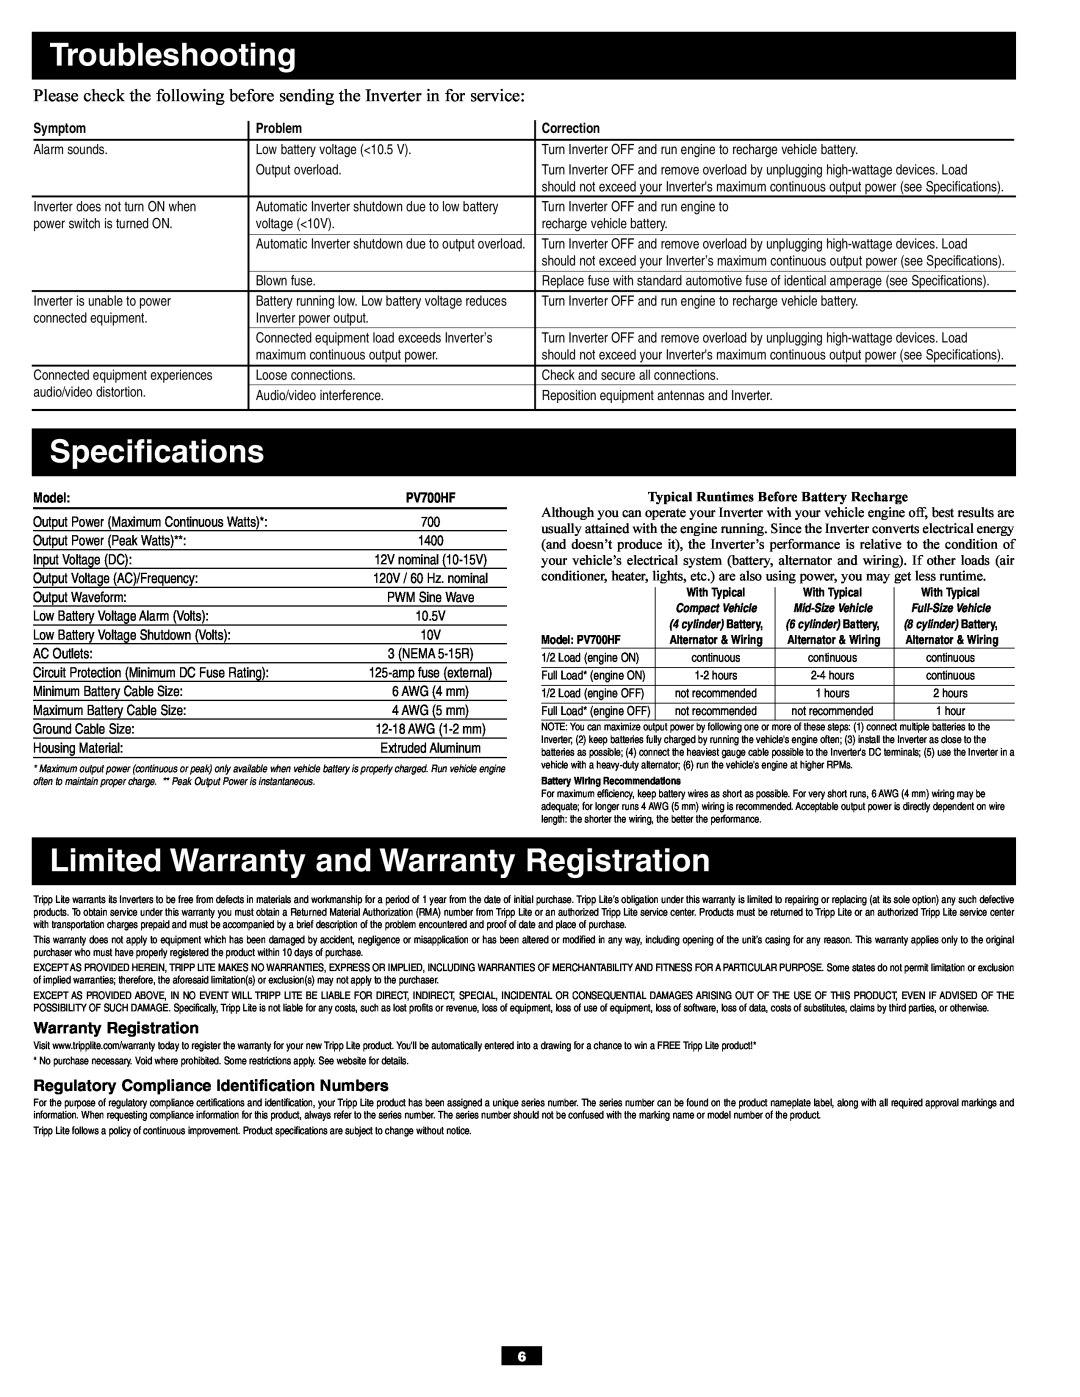 Tripp Lite PV700HF Troubleshooting, Specifications, Limited Warranty and Warranty Registration, Symptom, Problem, Model 